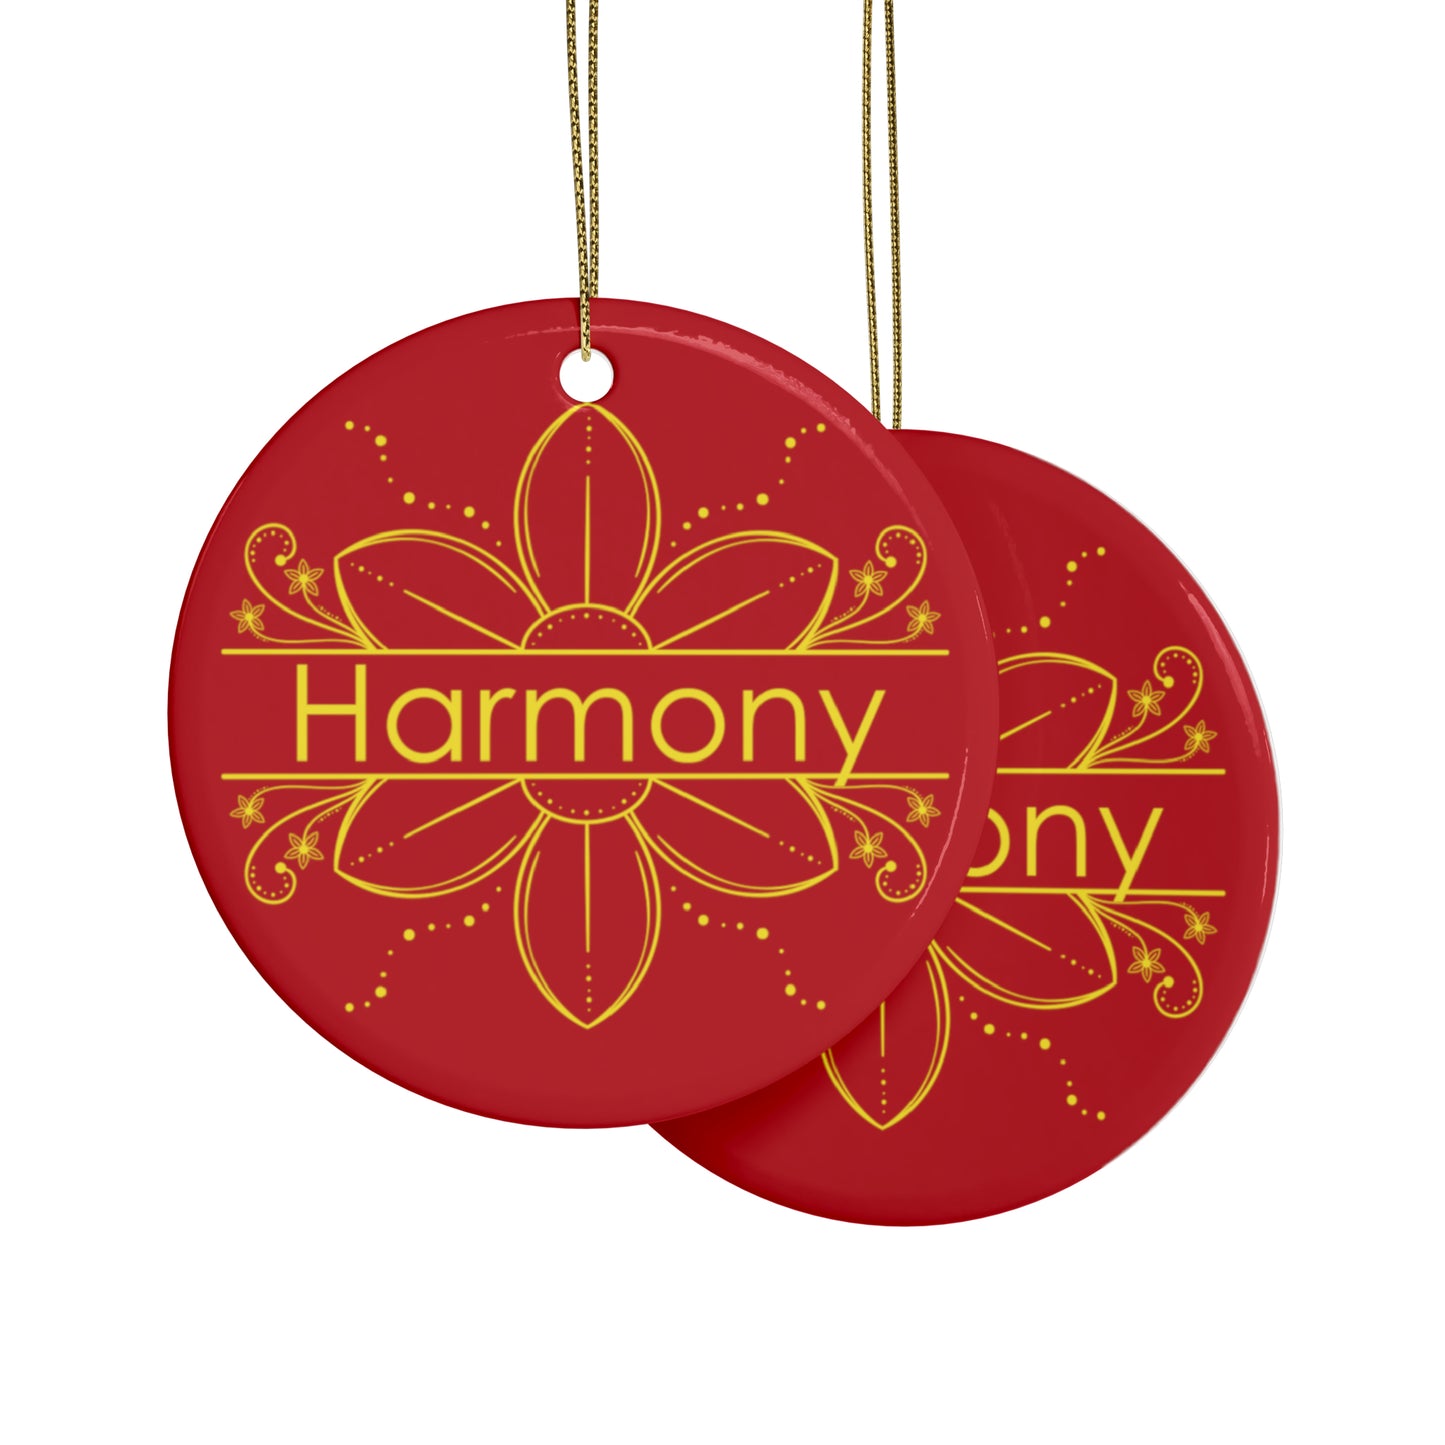 "Harmony" Ceramic Ornament (Red)